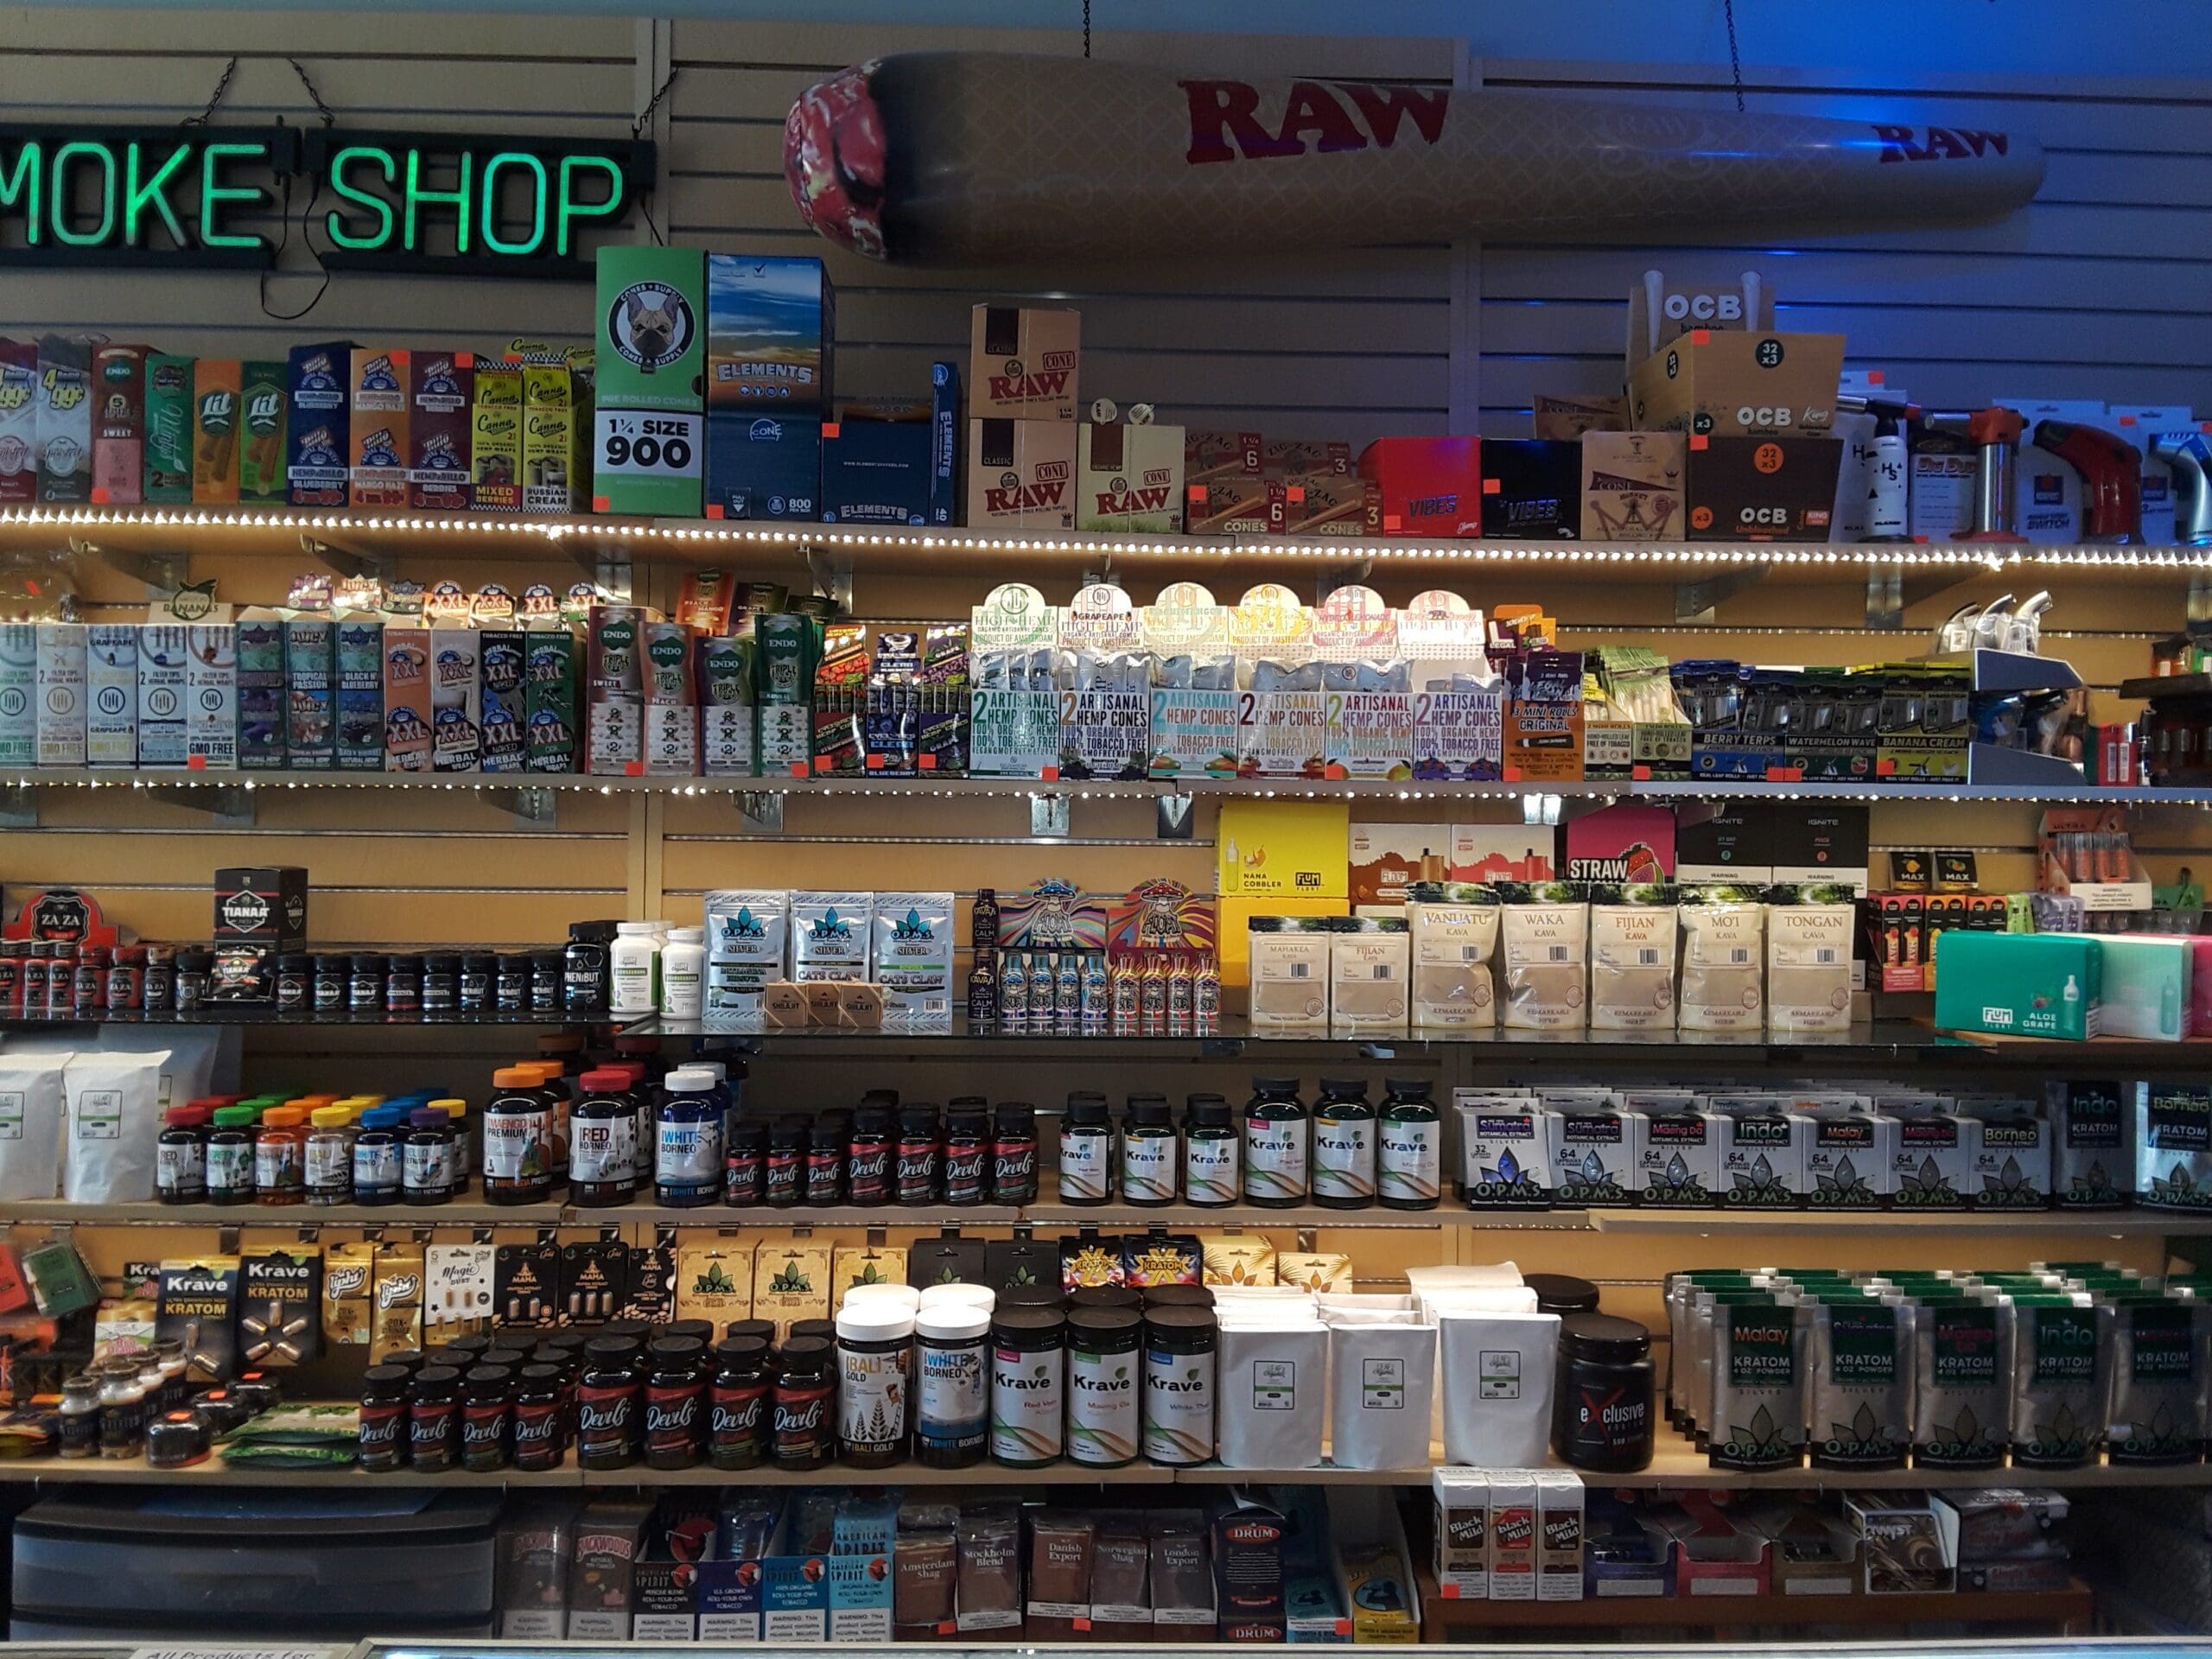 Ark Smoke Shop Kava Shop 91344 Herbal Supplement scaled